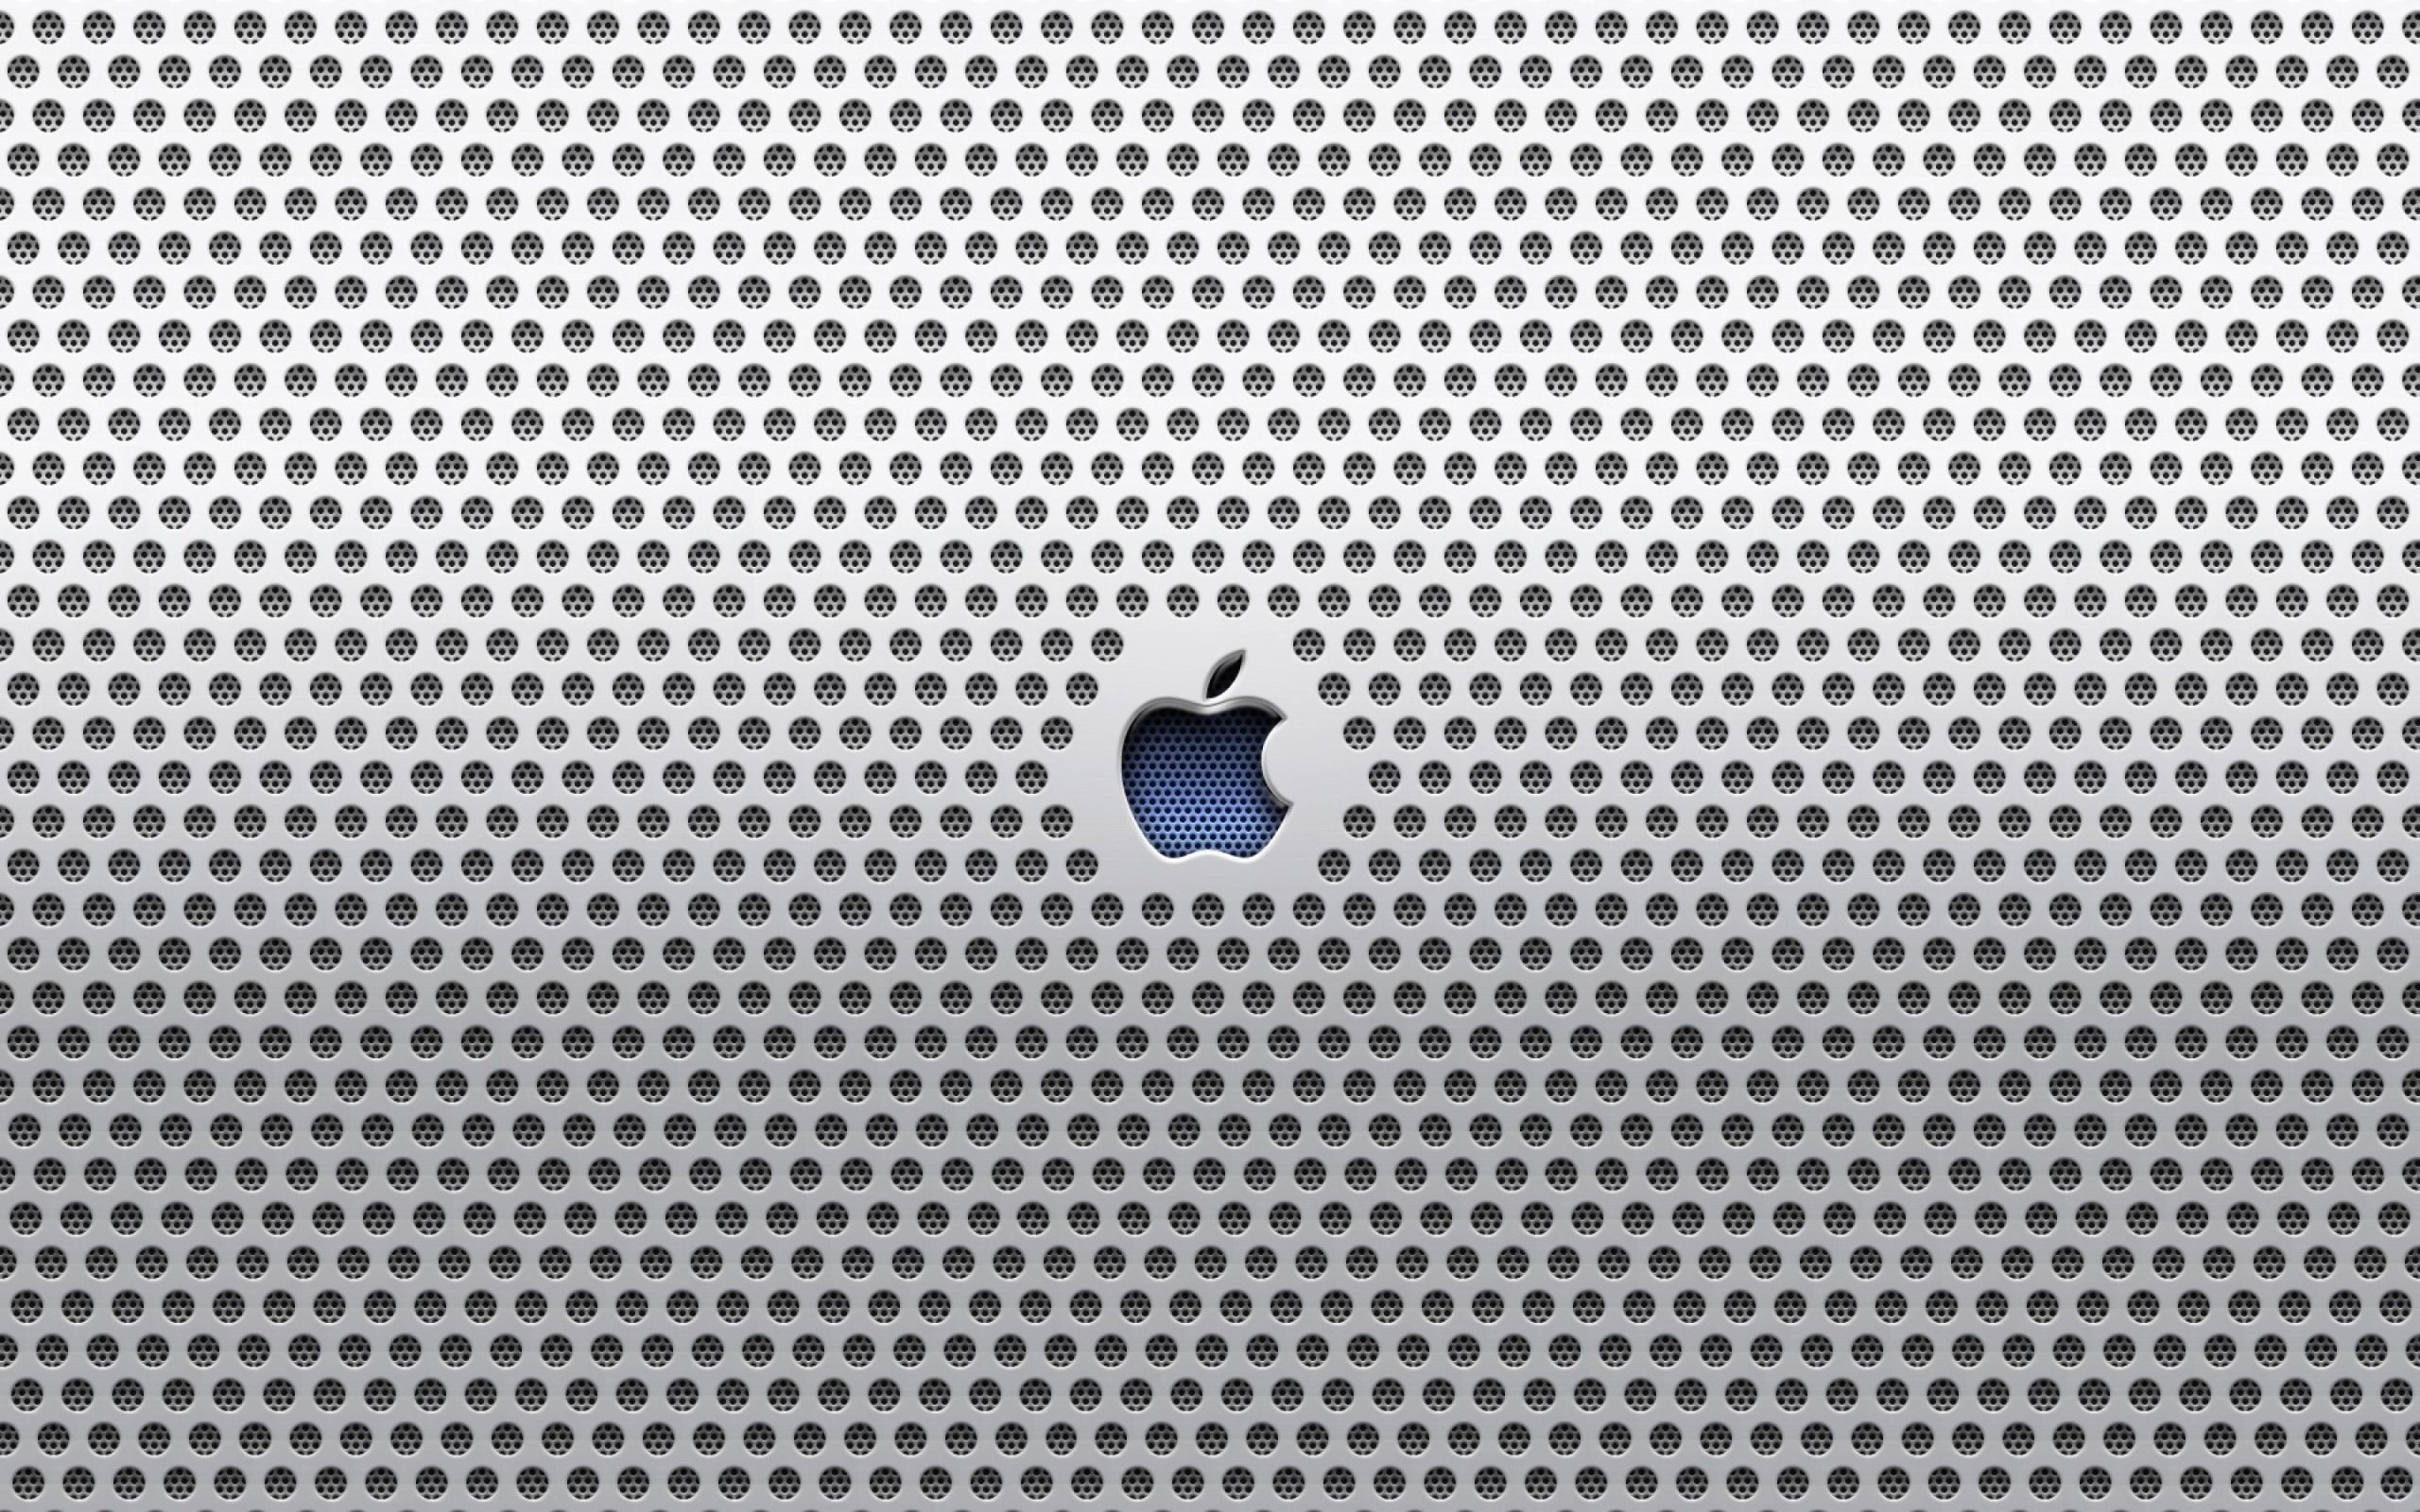 Apple Metal Hd Mac Wallpaper Download | Free Mac Wallpapers Download